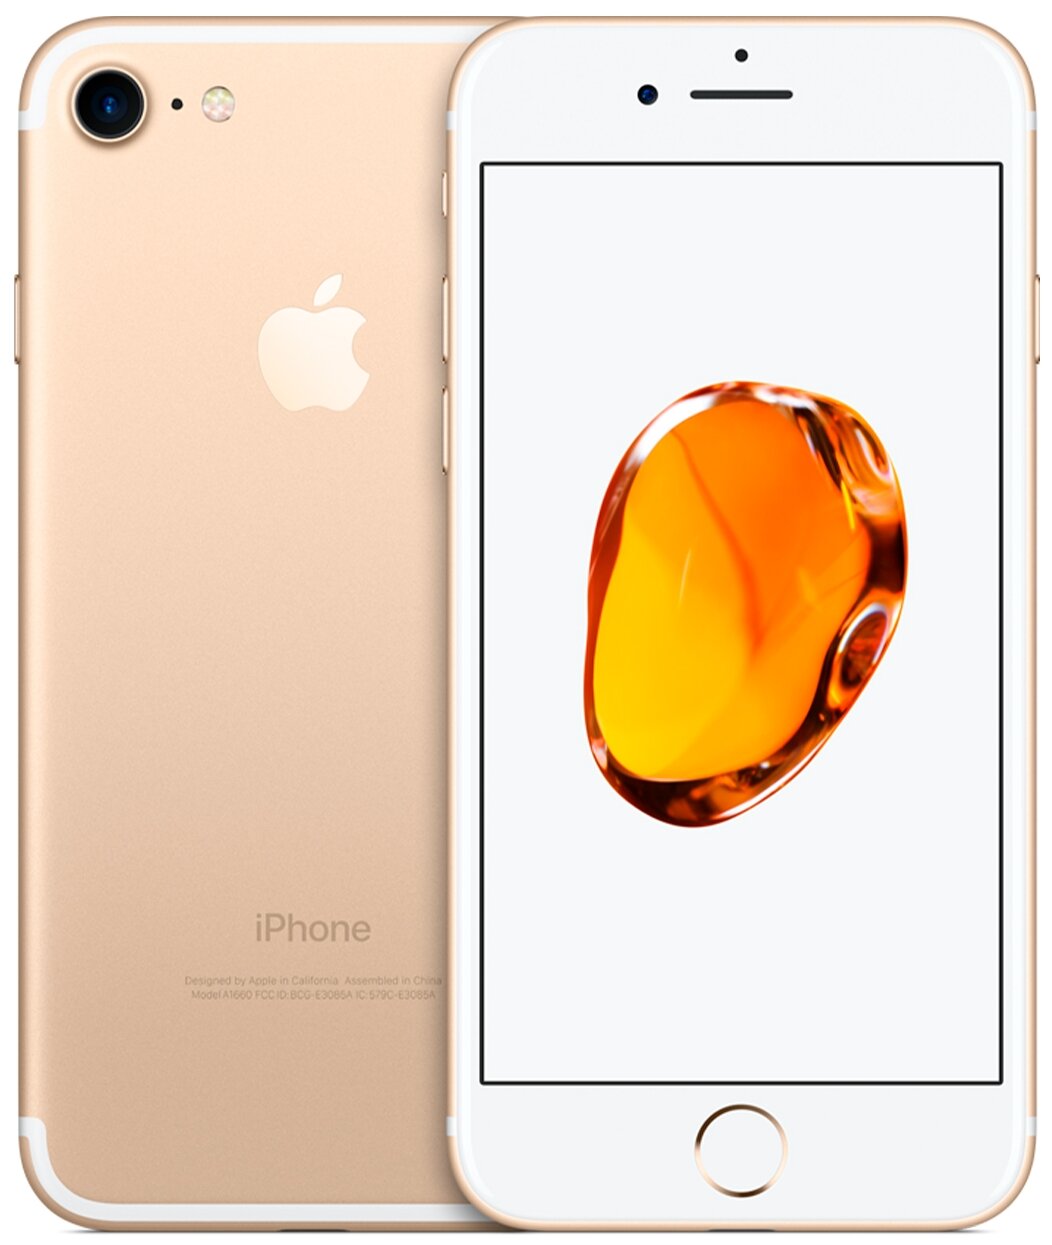 Смартфон Apple iPhone 7 32 ГБ, 1 SIM, золотой